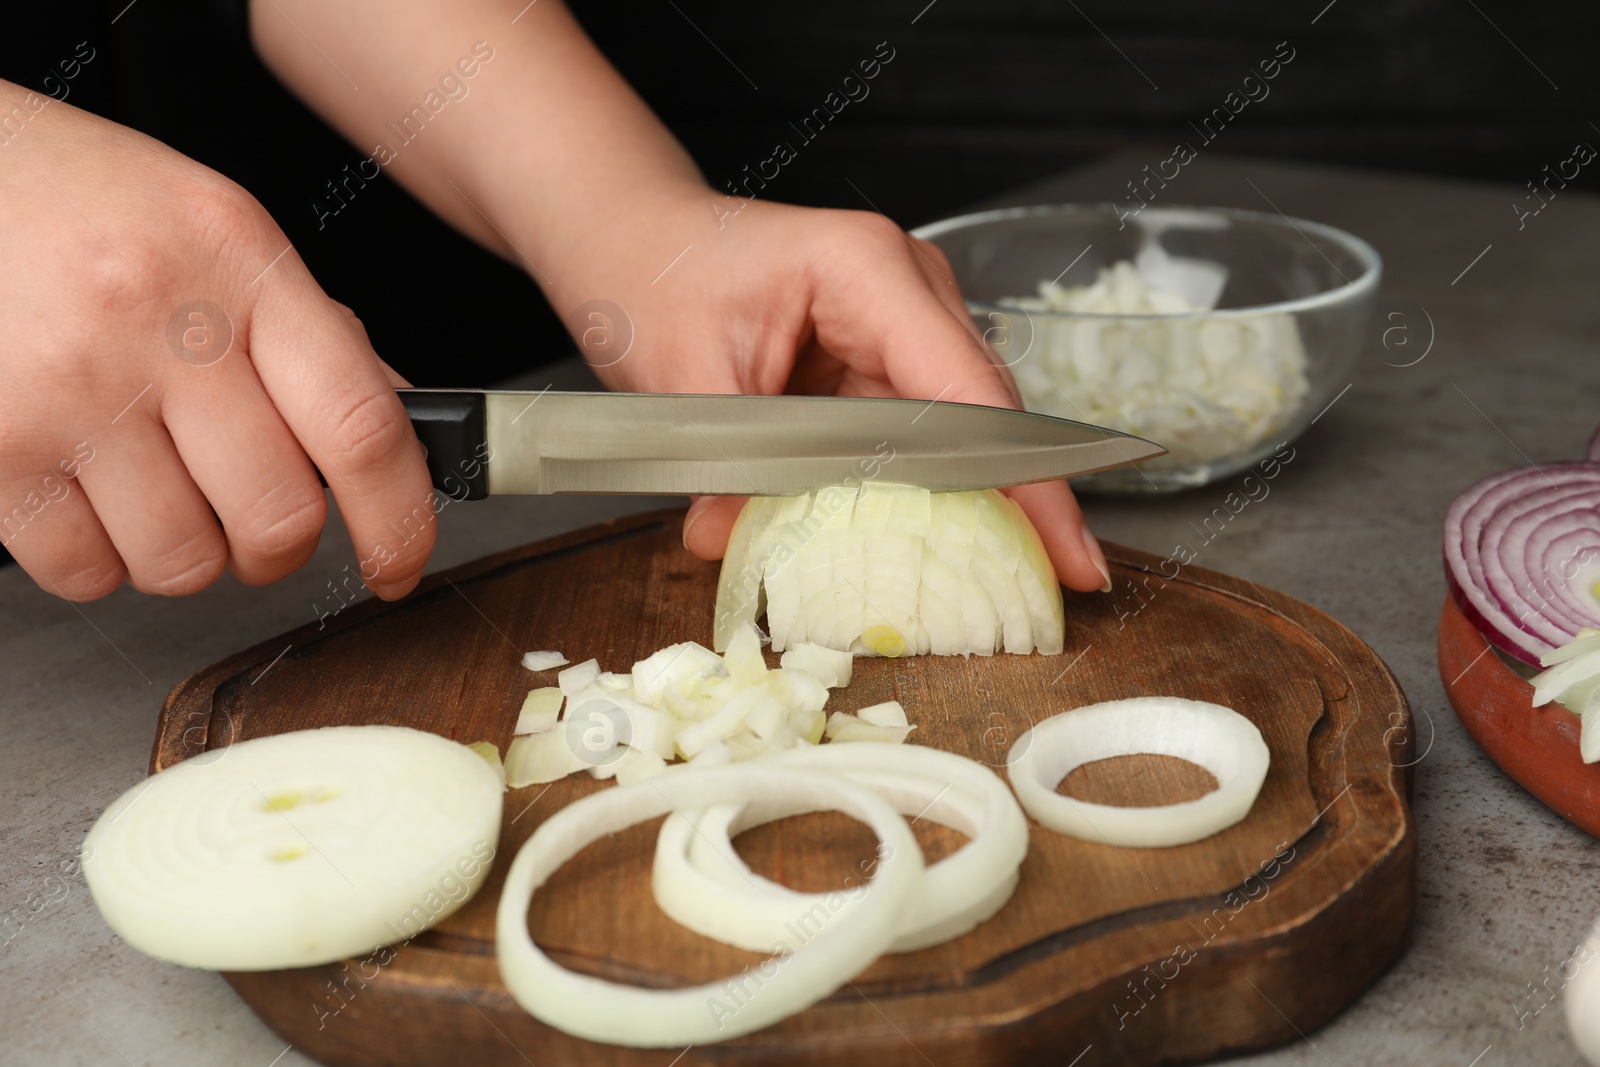 Photo of Woman cutting fresh onion on wooden board, closeup